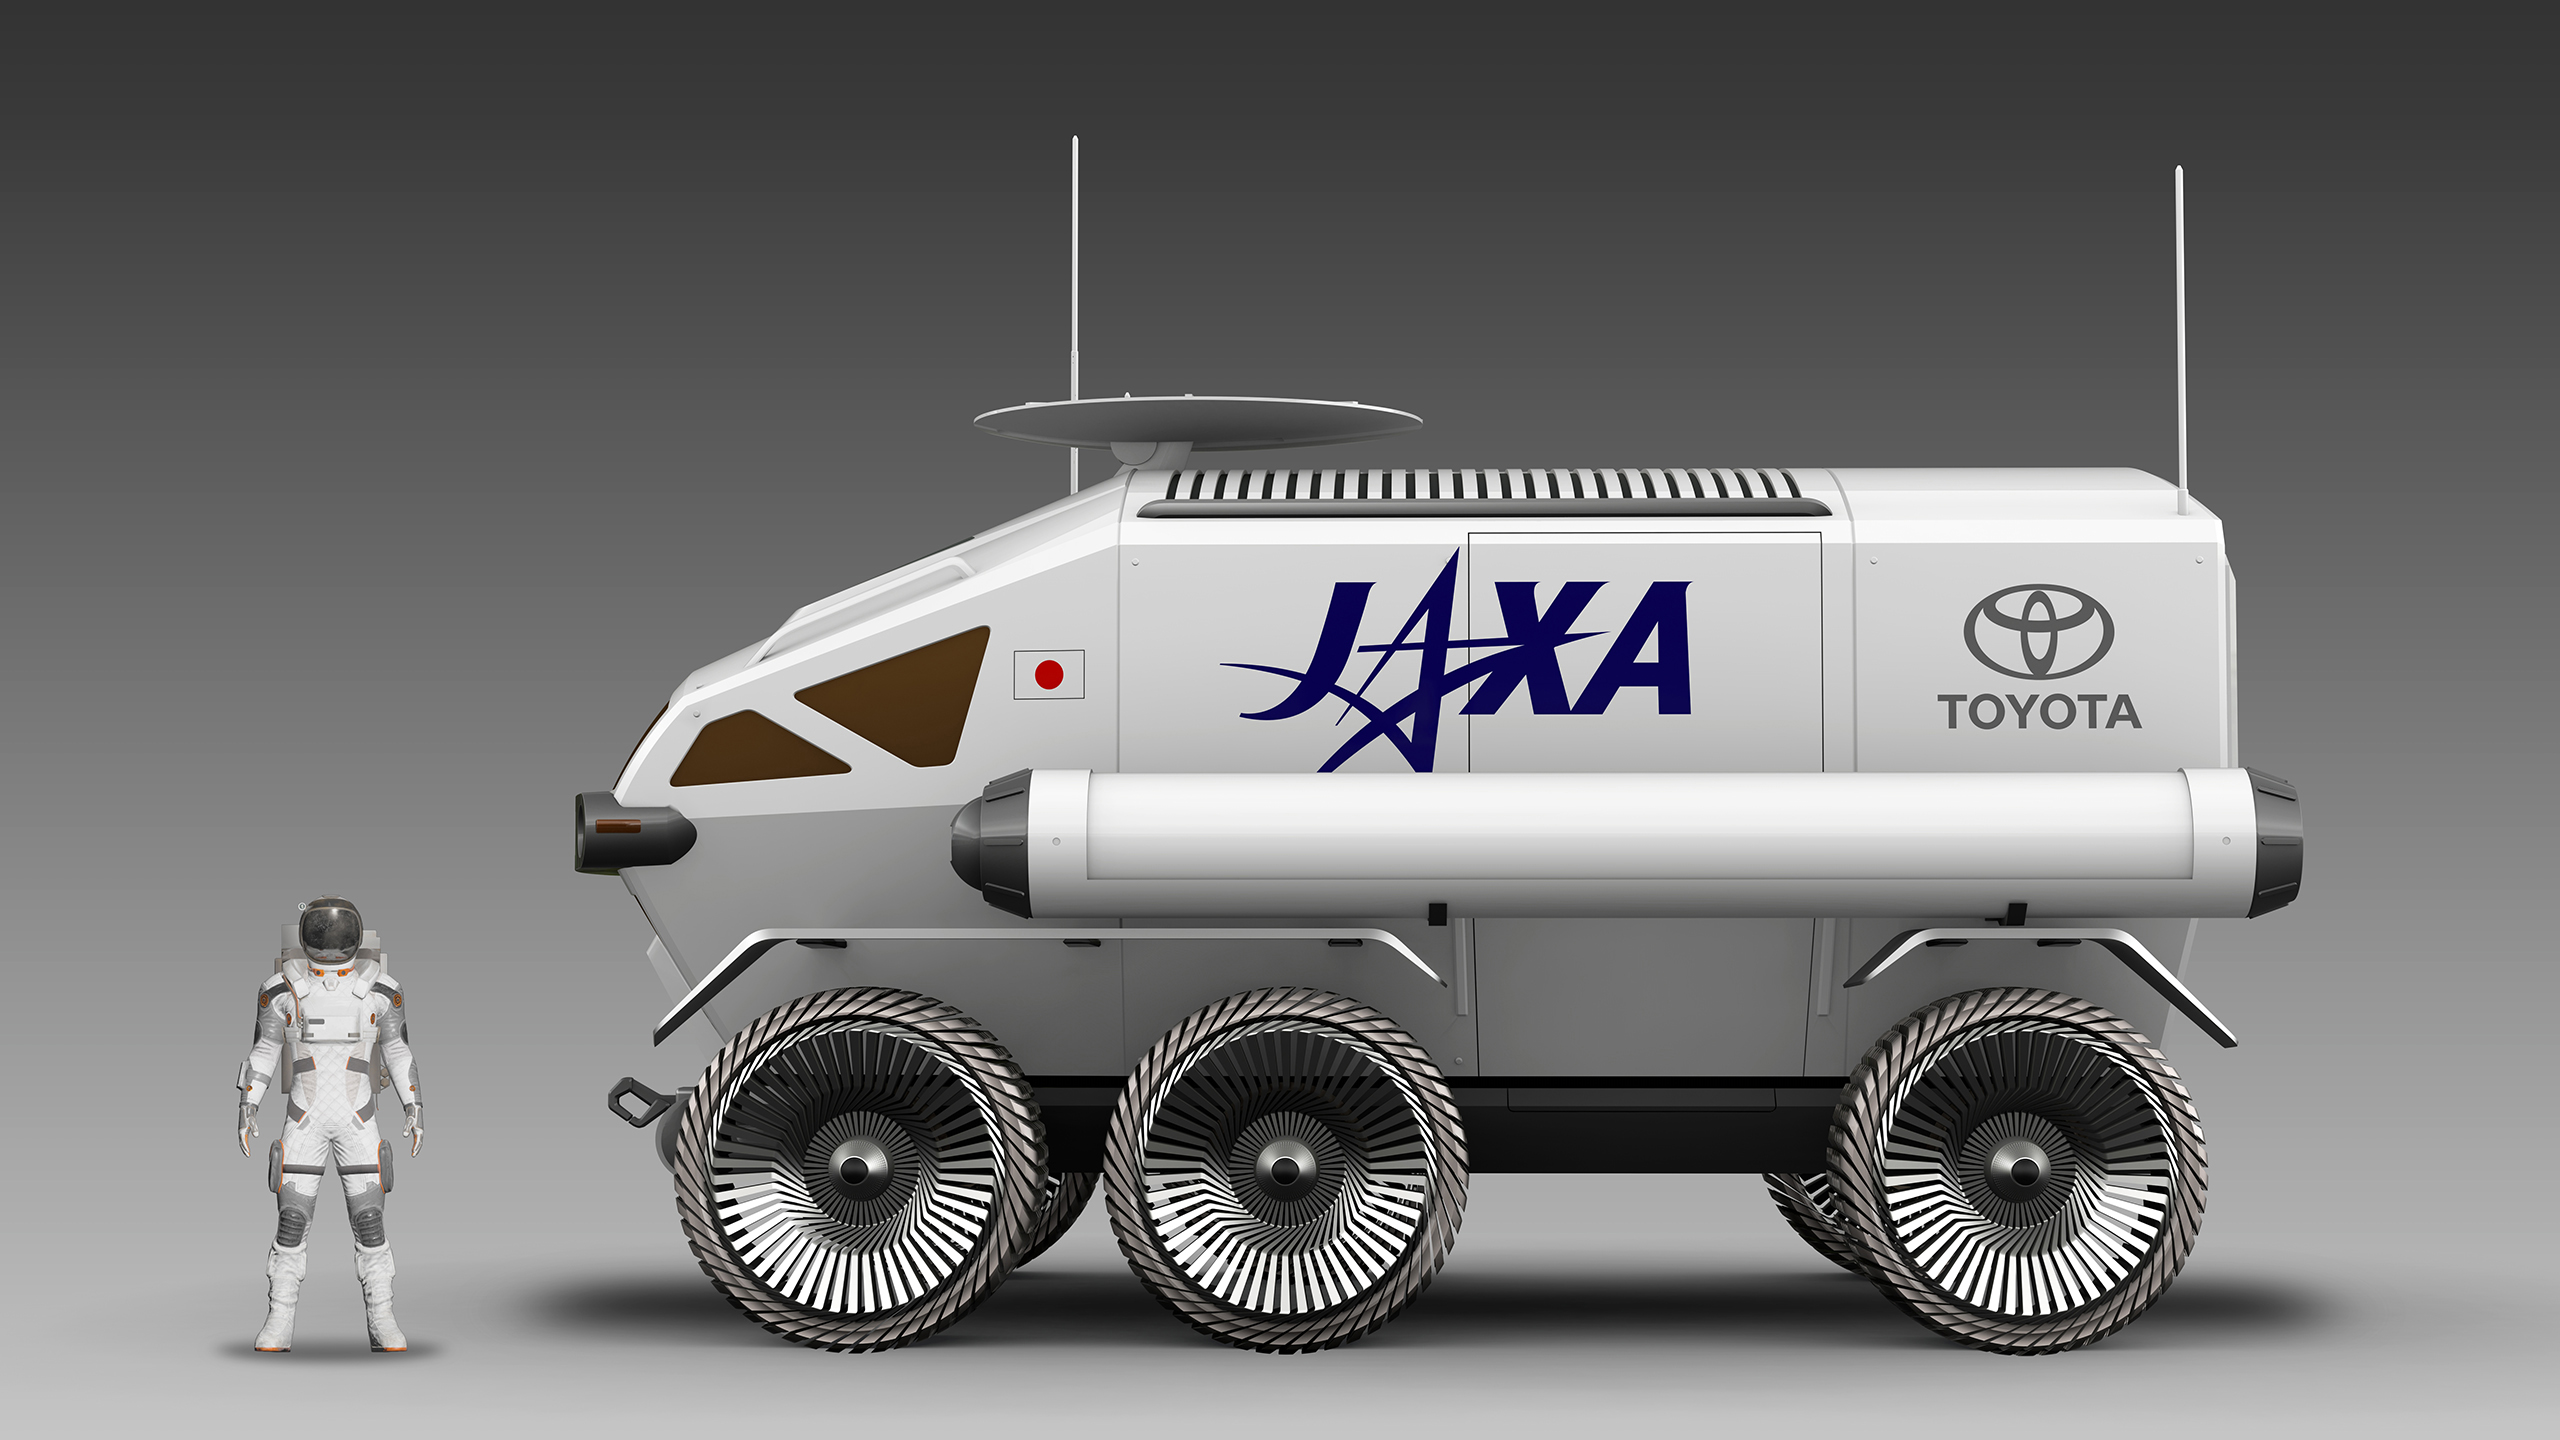 Toyota JAXA Rover Image